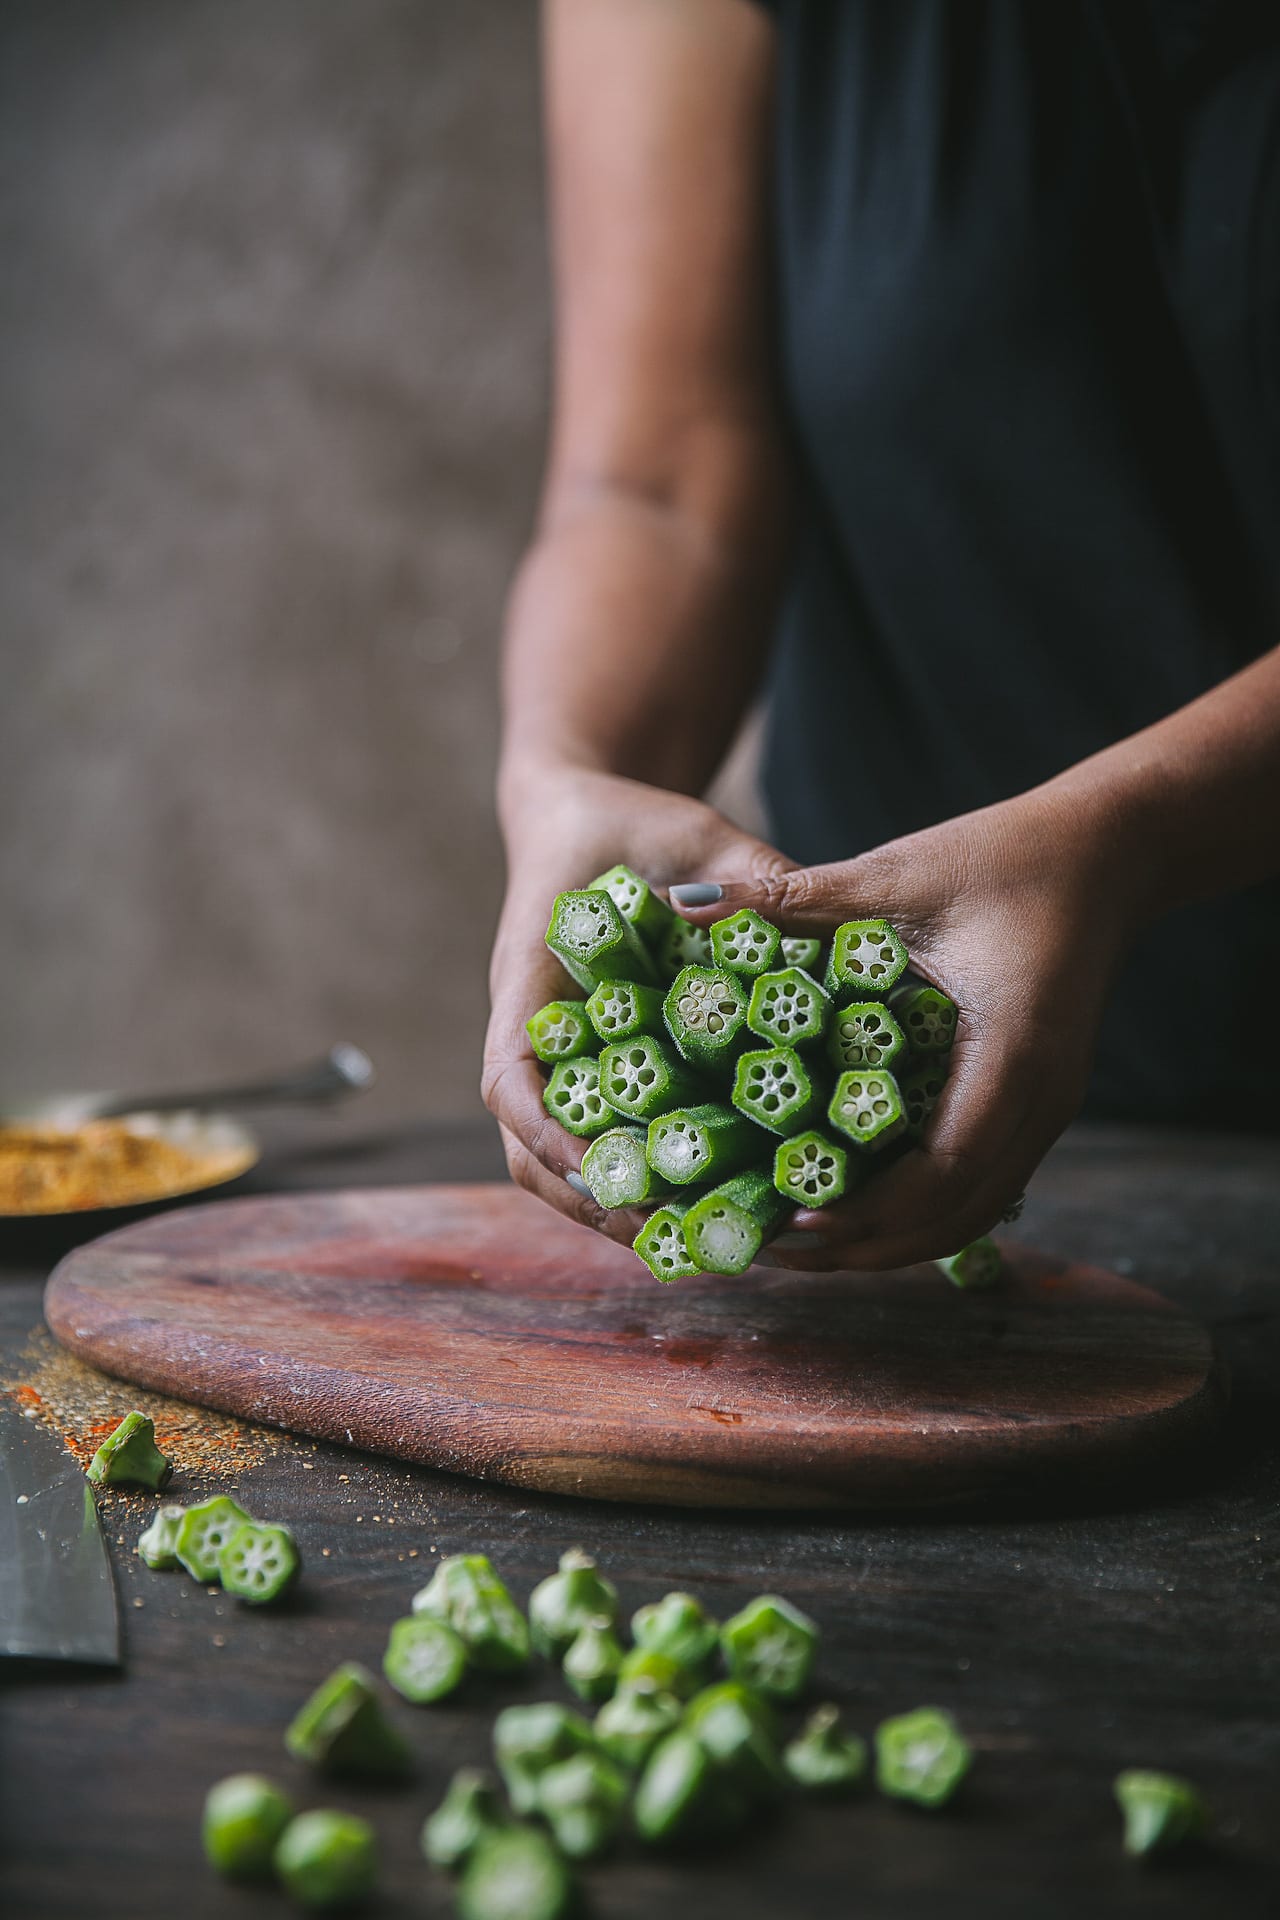 Learn how to pick fresh okra | Playful Cooking #okra #bhindi #playfulcooking #foodphtography